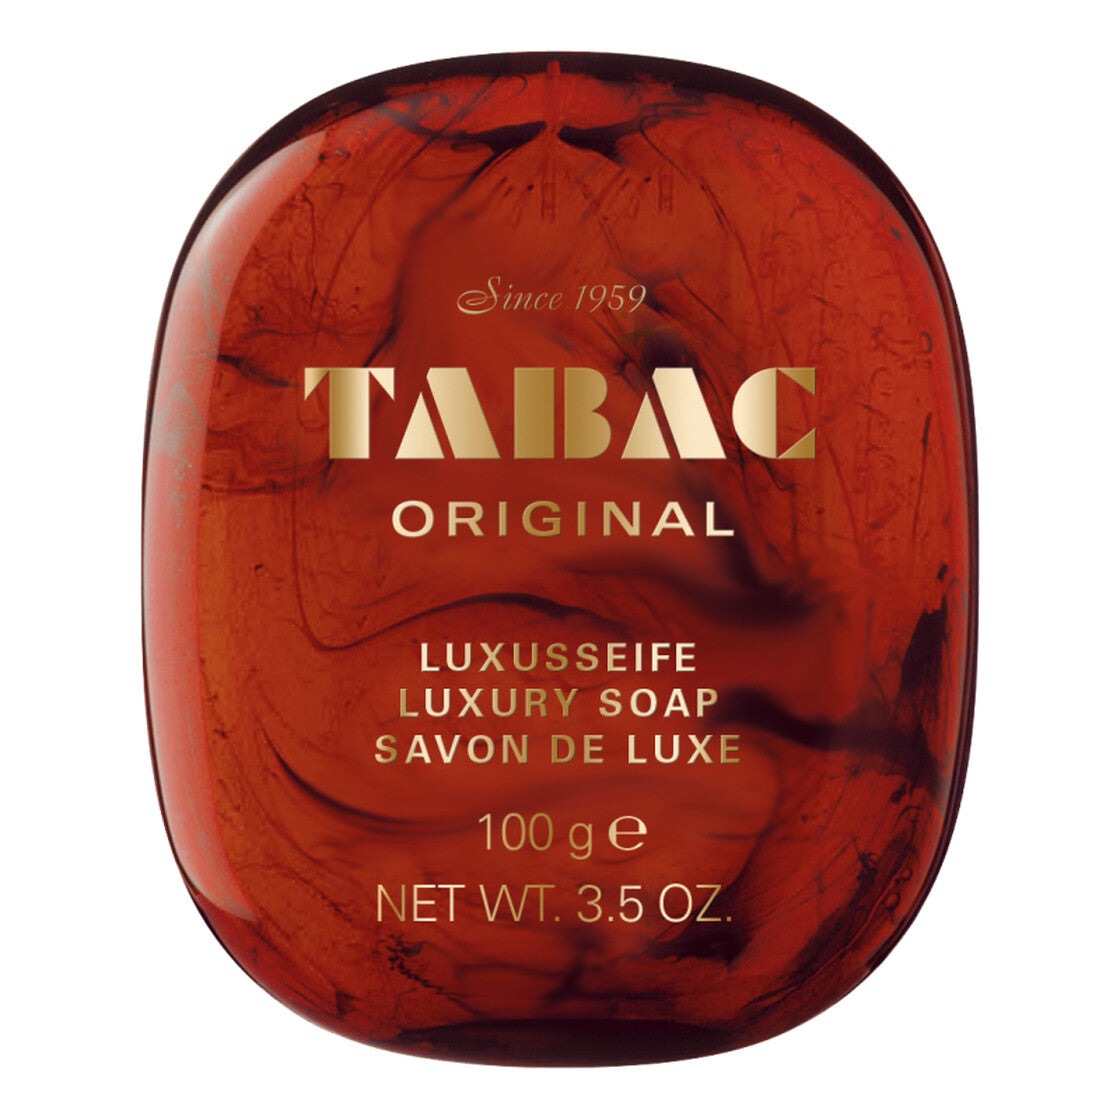 Tabac Original Savon De Luxe Luxury Soap (100 g) Tabac